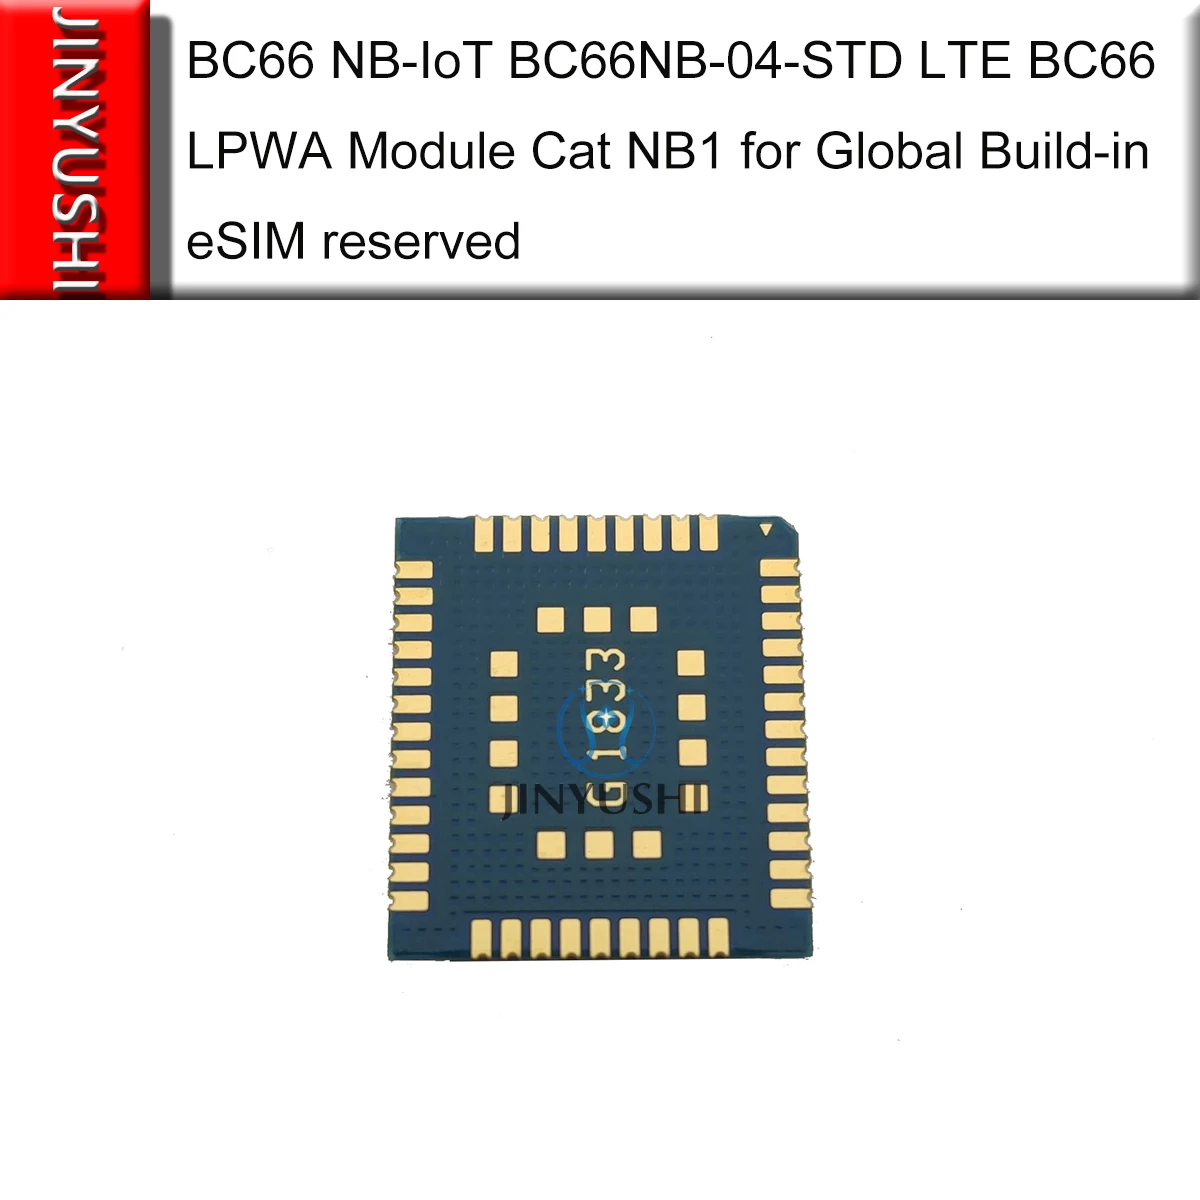 JINYUSHI BC66 NB-Di BC66NB-04-STD LTE BC66 LPWA Modulis Katė NB1 Pasaulio Build-in eSIM rezervuota